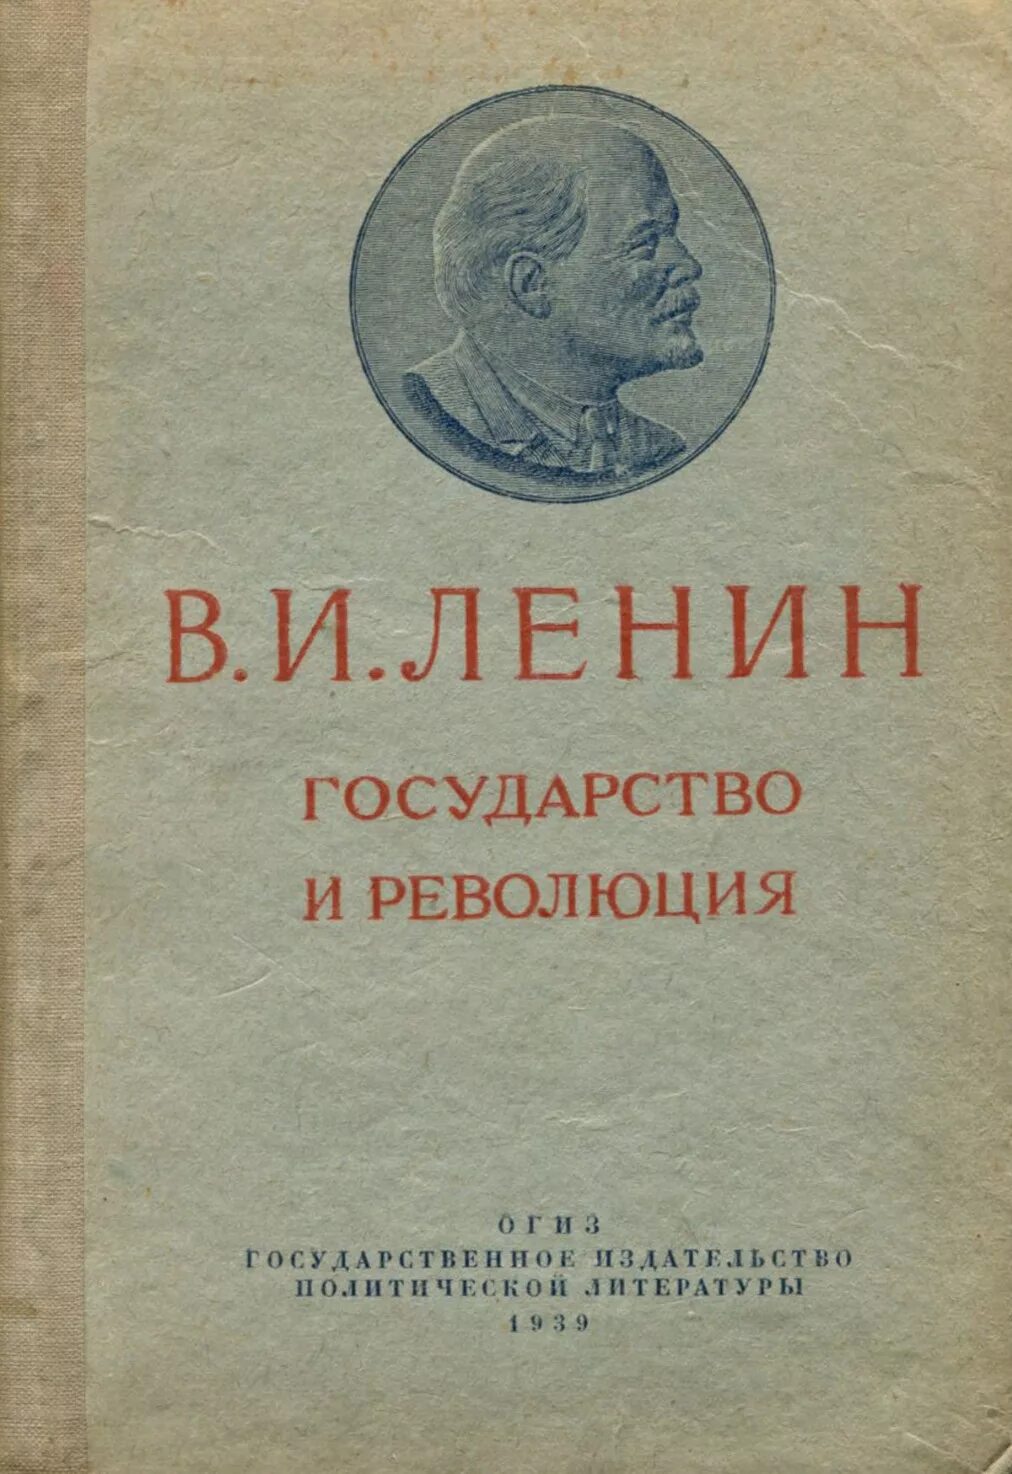 2 революции ленина. Книга Ленина государство и революция. Революция Ленин с книгой.